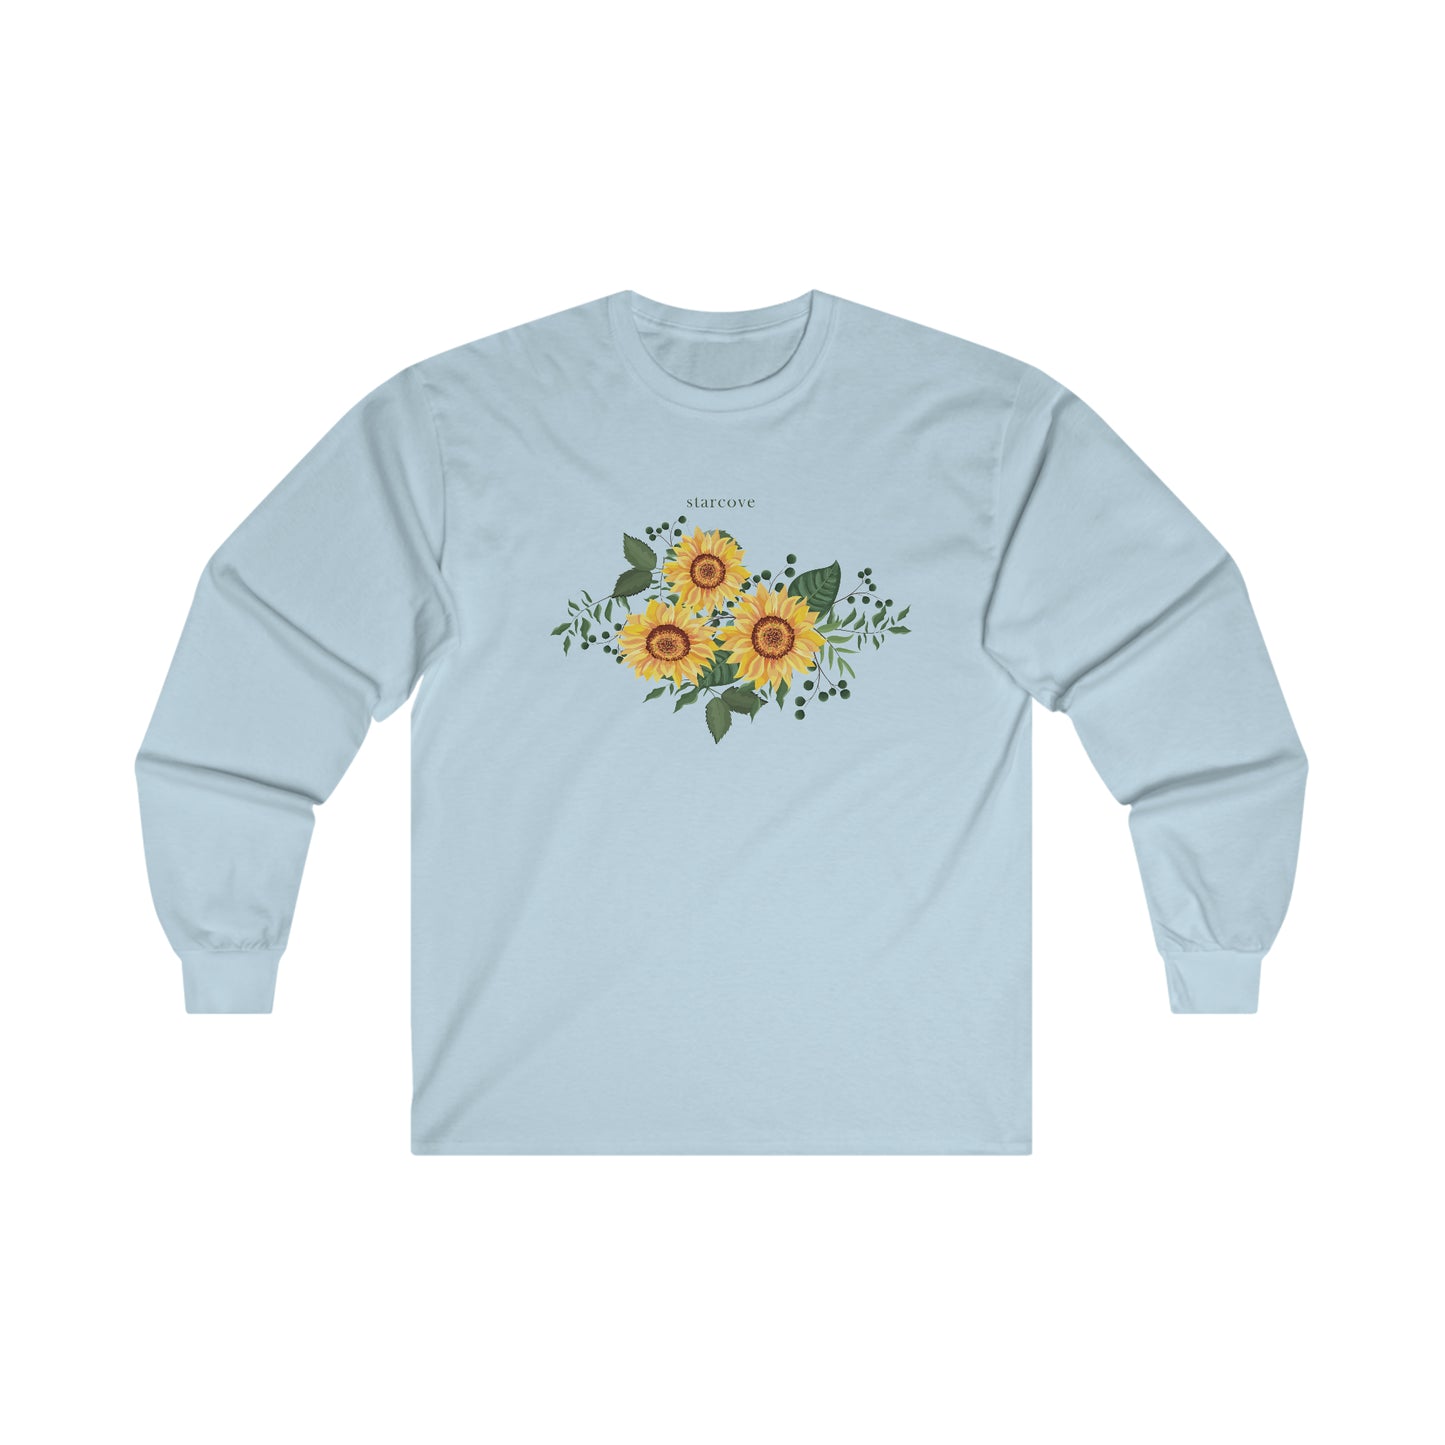 Sunflower Long Sleeve Shirt, Yellow Flower Floral Art Print Nature Cotton Tee Tshirt Top Botanical Women Men Outfit Starcove Fashion